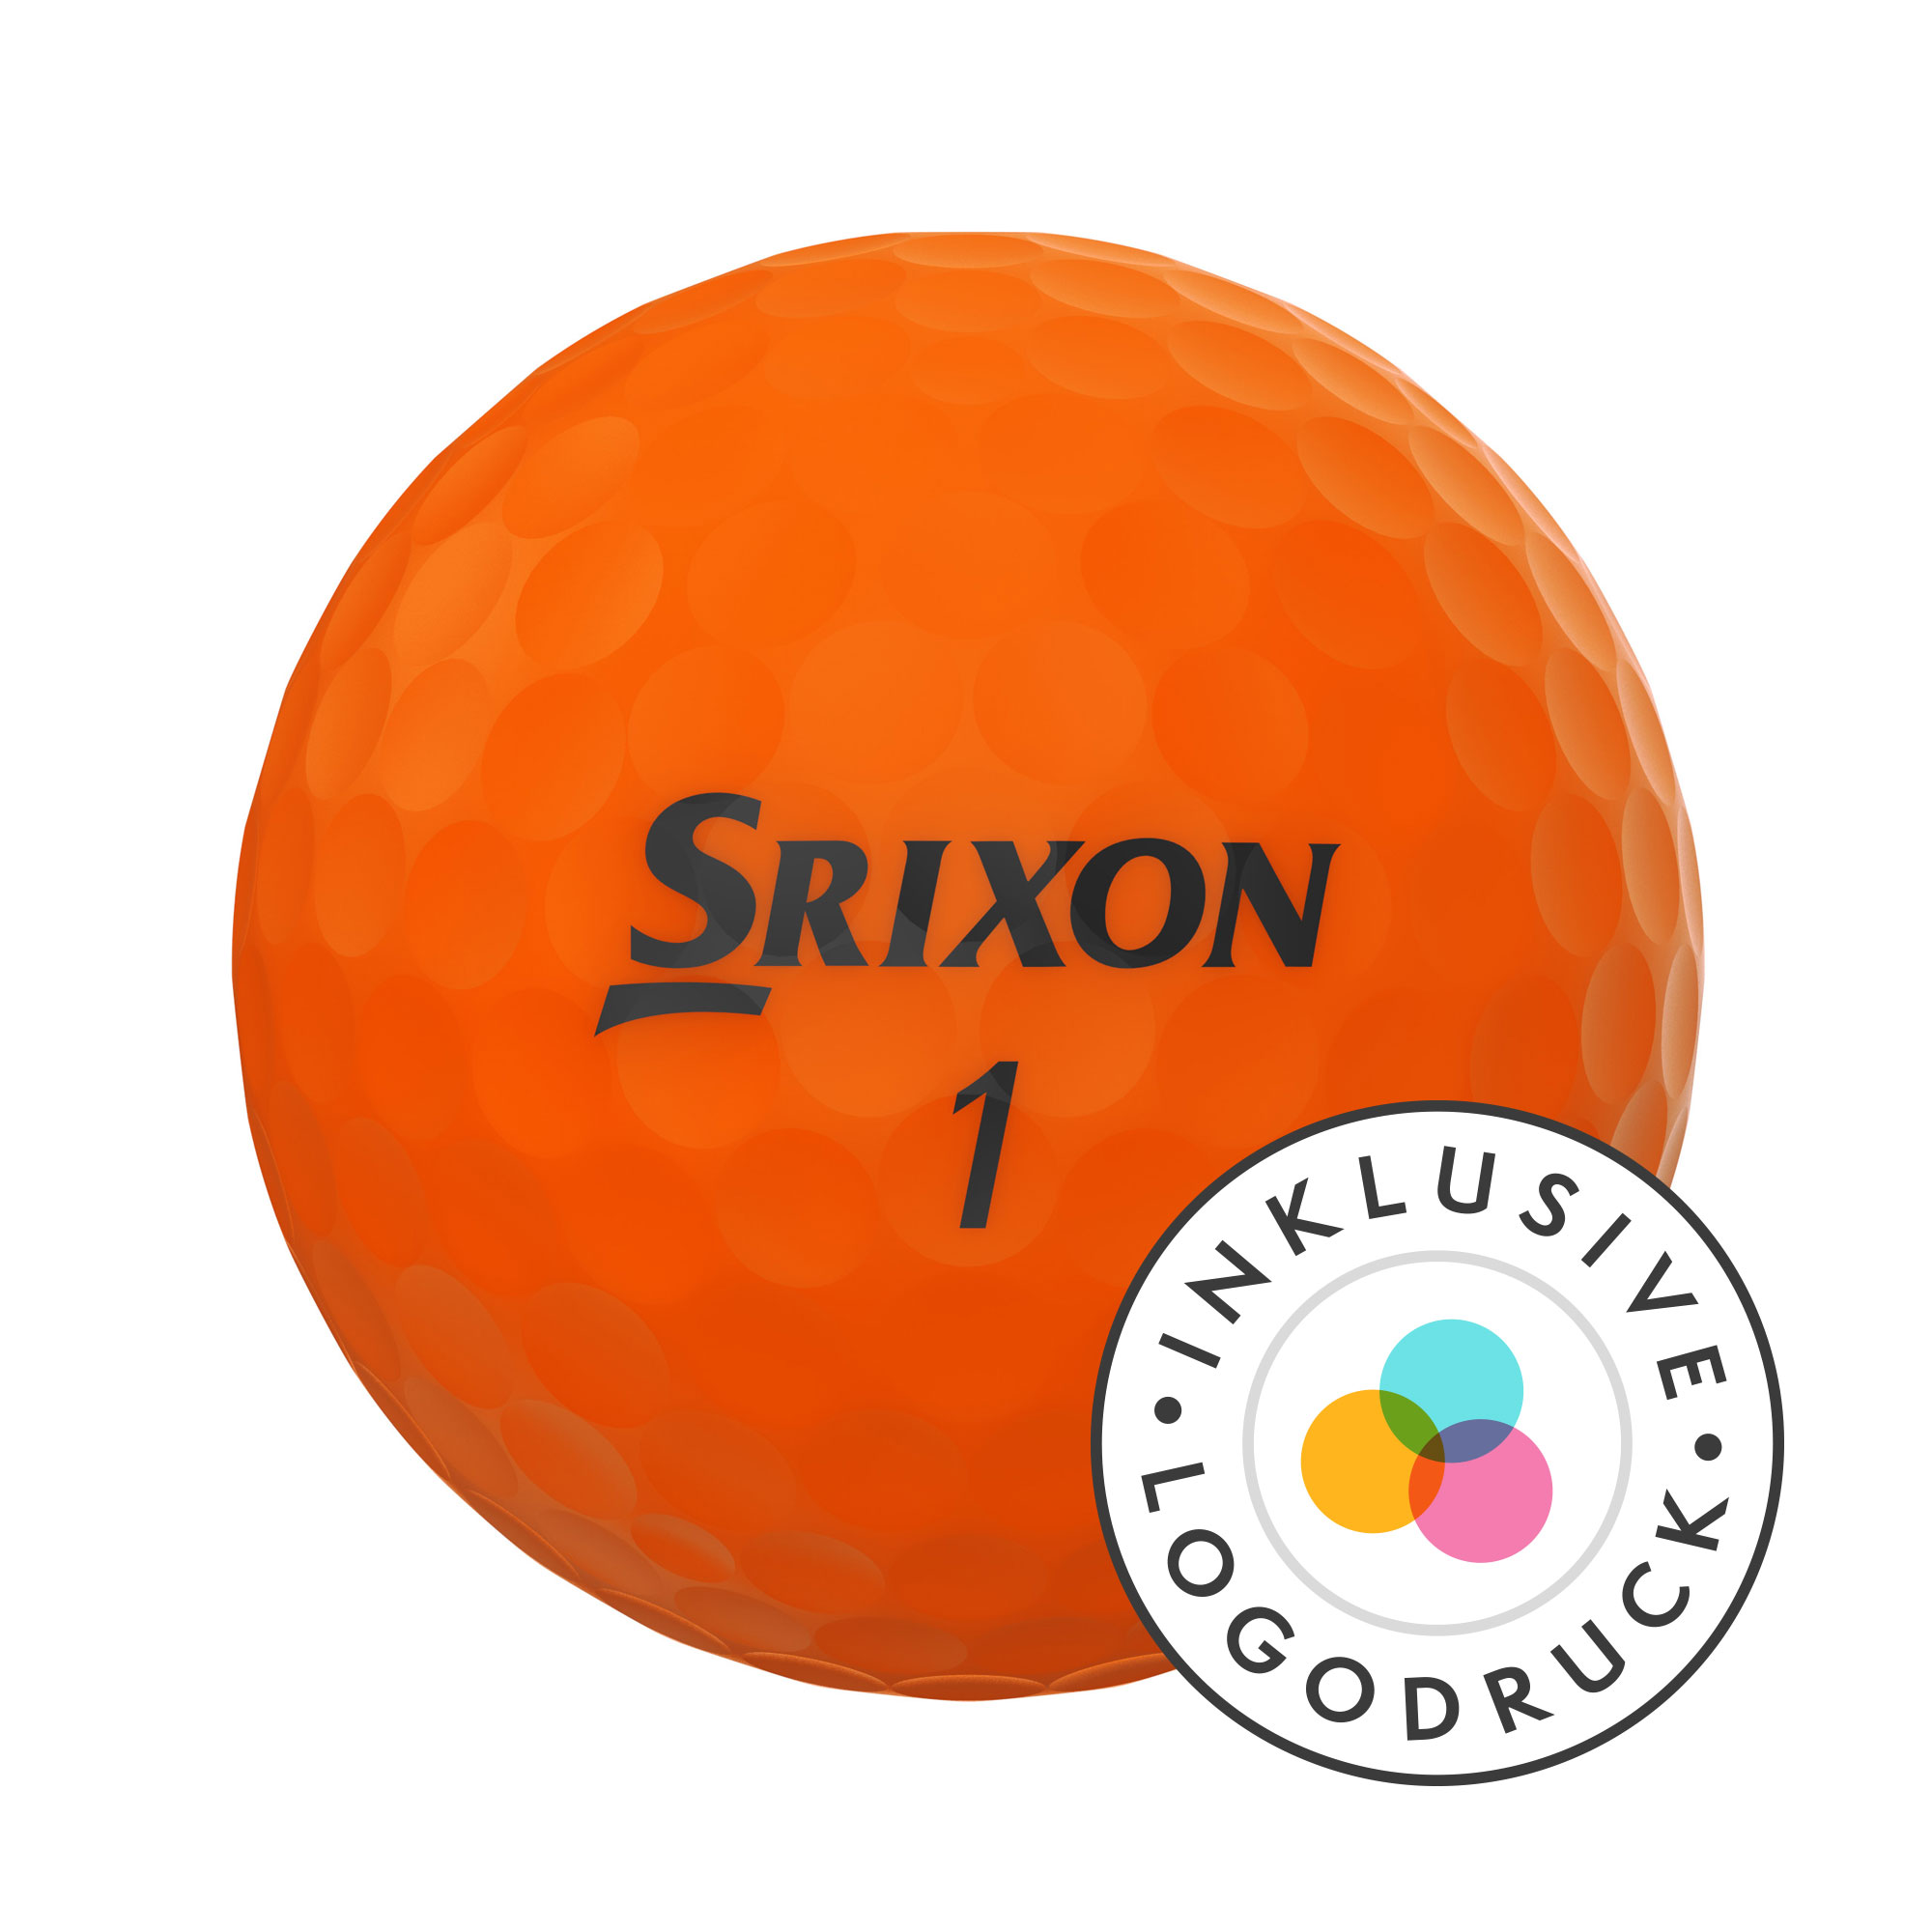 Srixon Soft Feel Golfbälle bedruckt, brite orange (VPE à 12 Bälle)